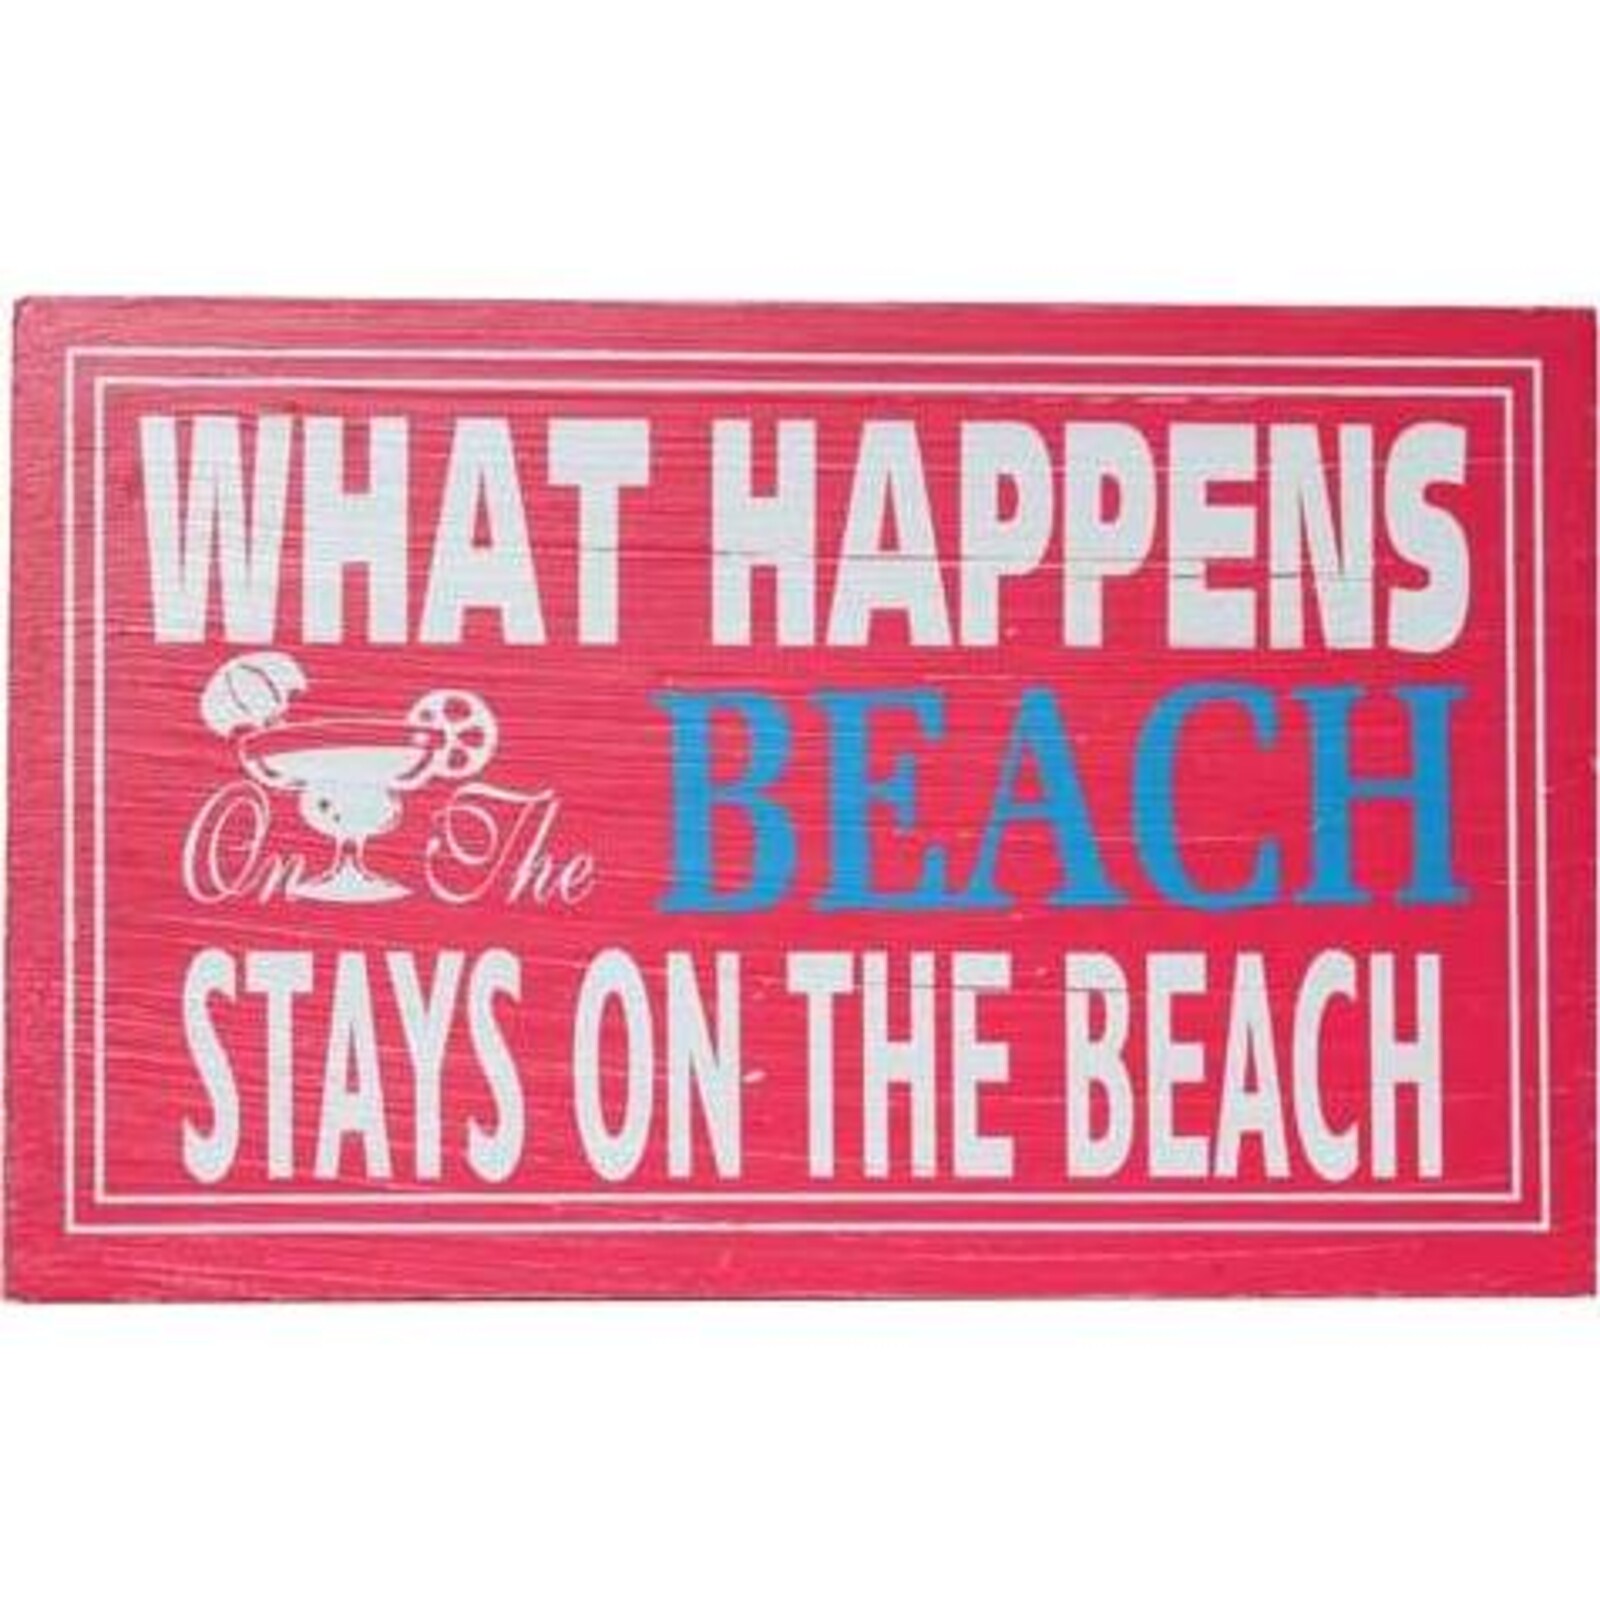 Sign Stays on the Beach